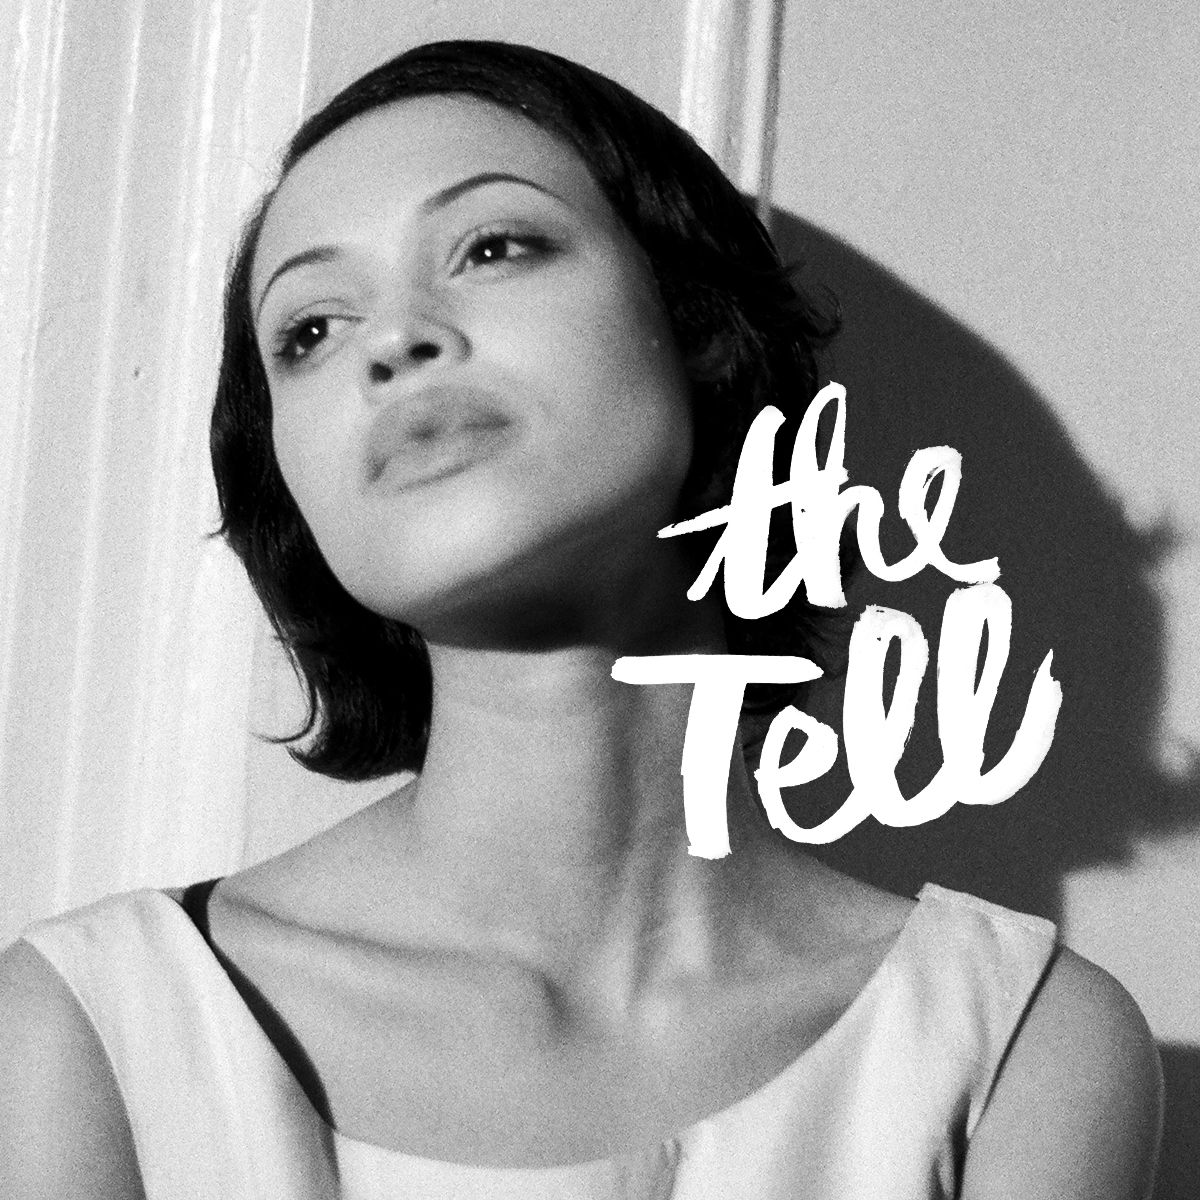 The Tell ep05 (Karley Sciortino, Jeffrey Lewis, Shilpa Ray)